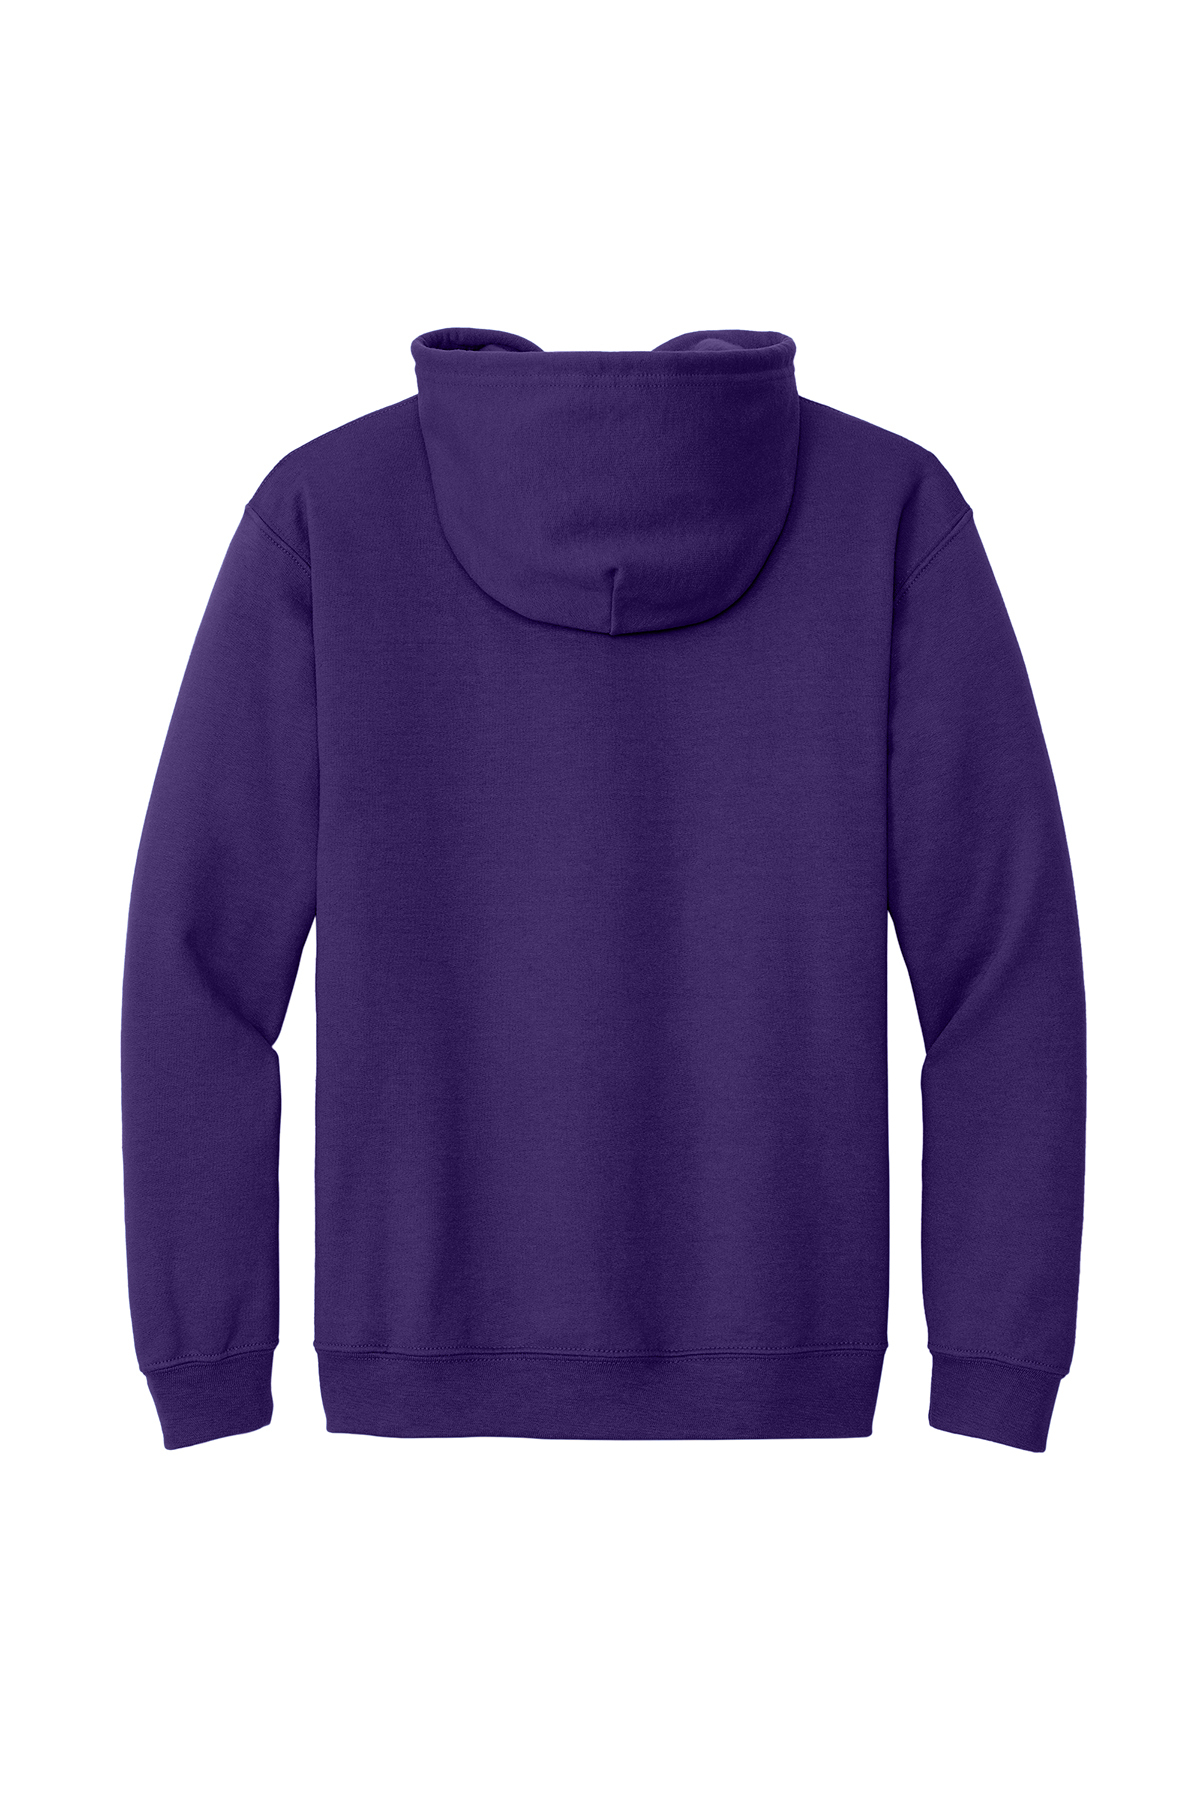 Tek Gear Hoodie Purple Size M - $14 (30% Off Retail) - From braelyn